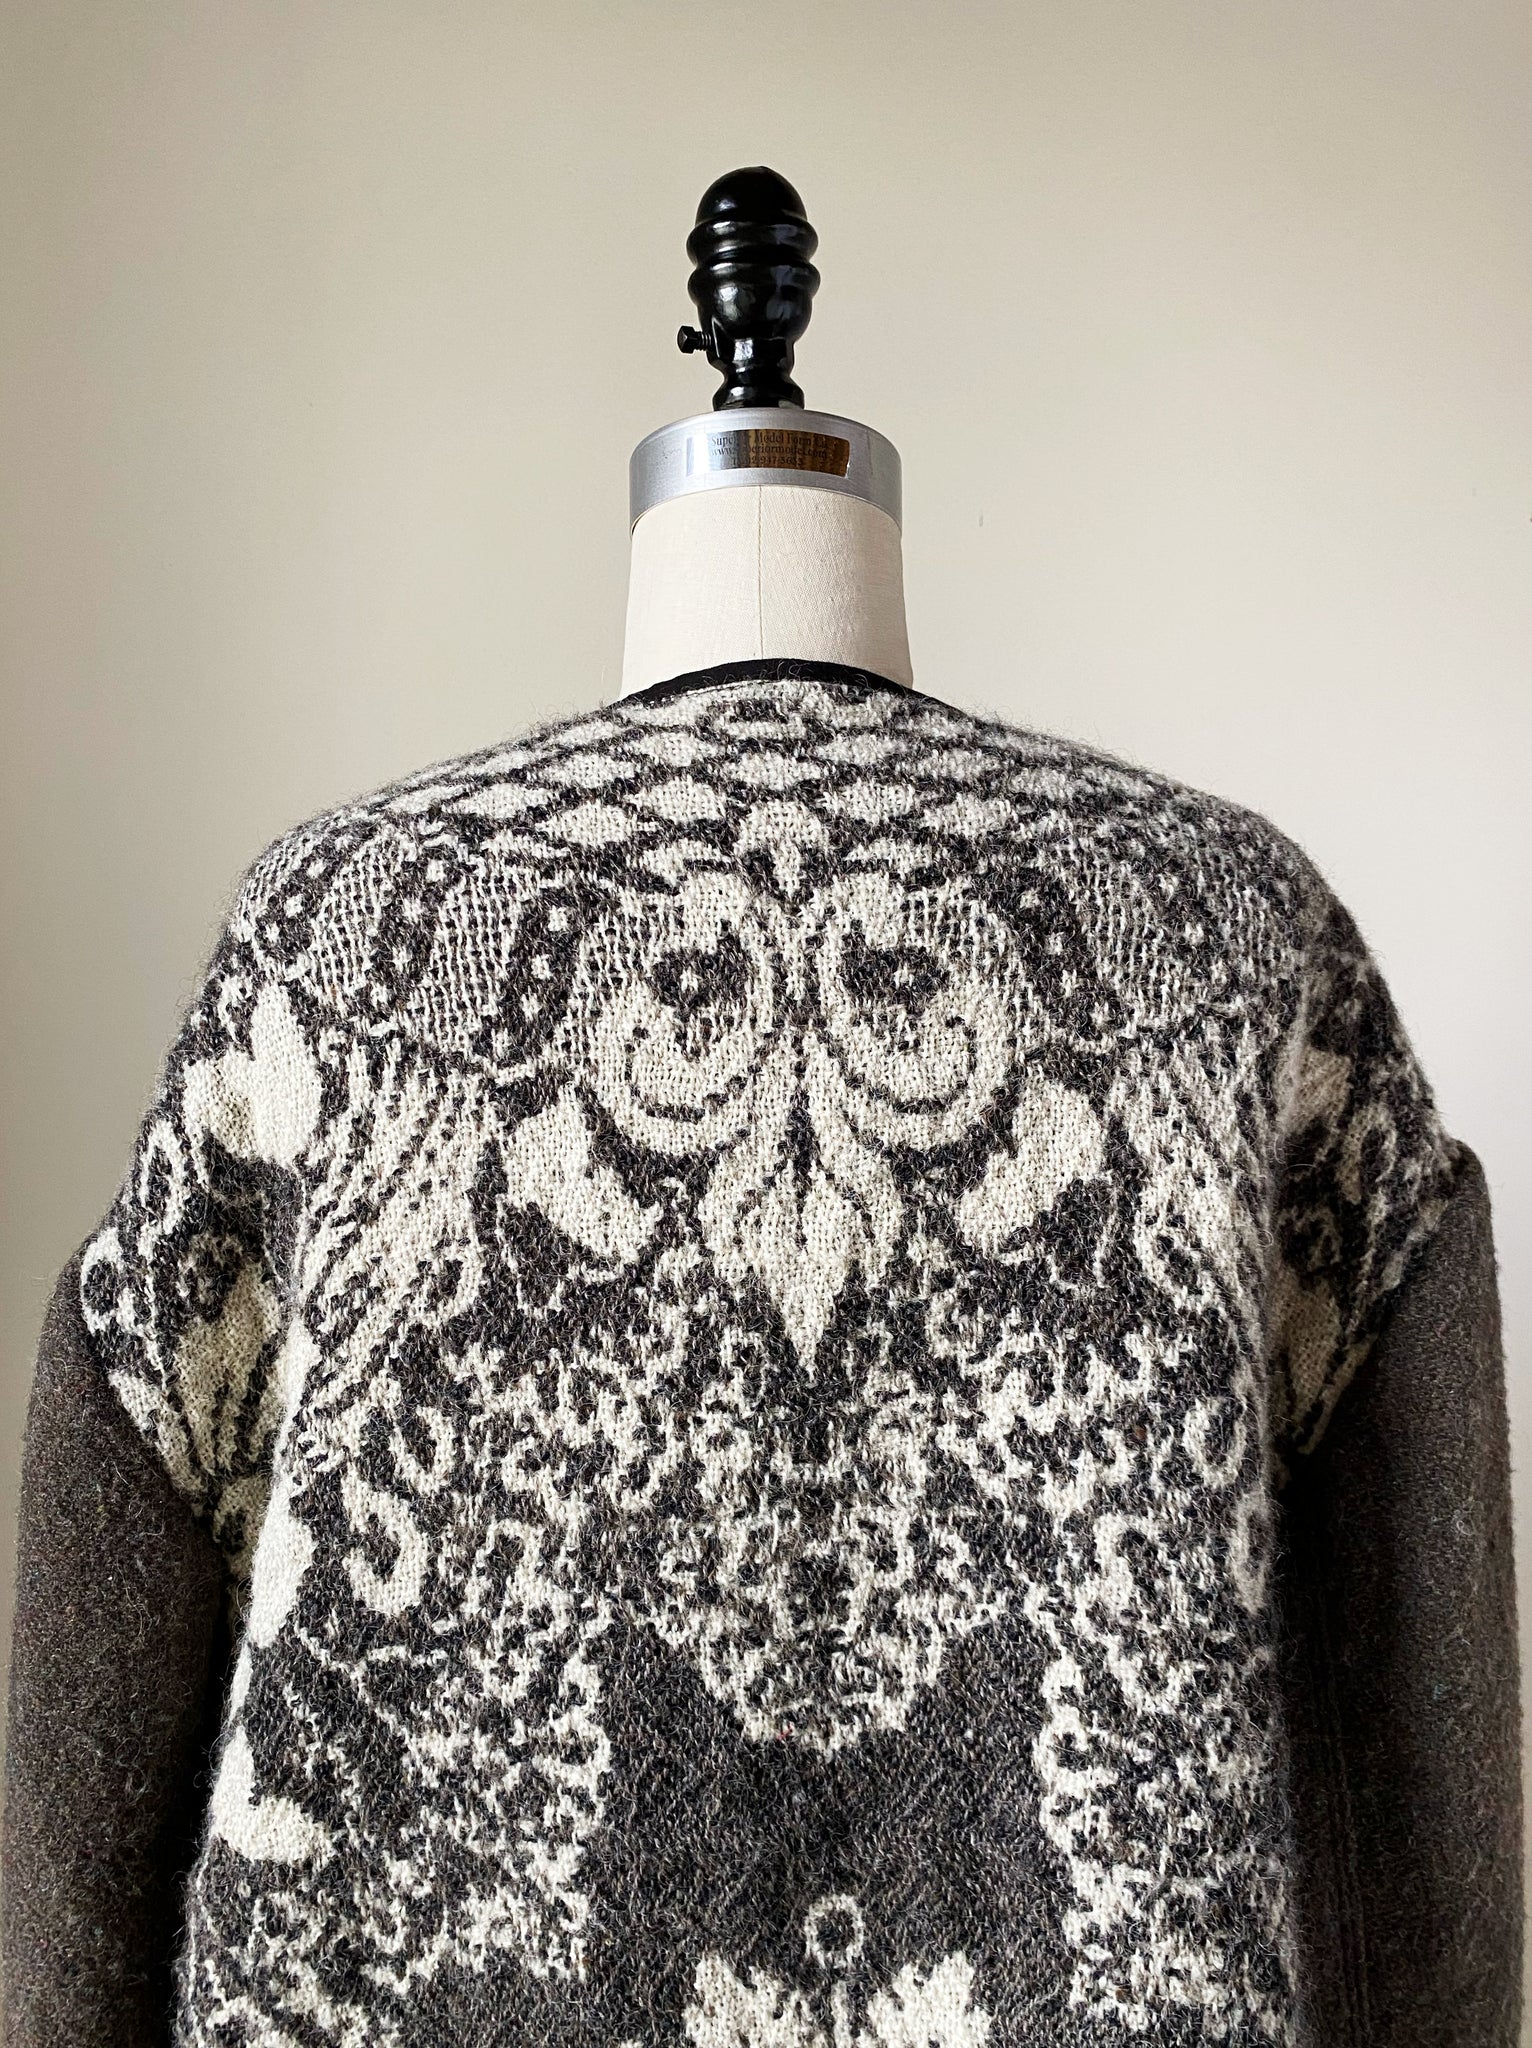 19th century rug pattern jacket #3